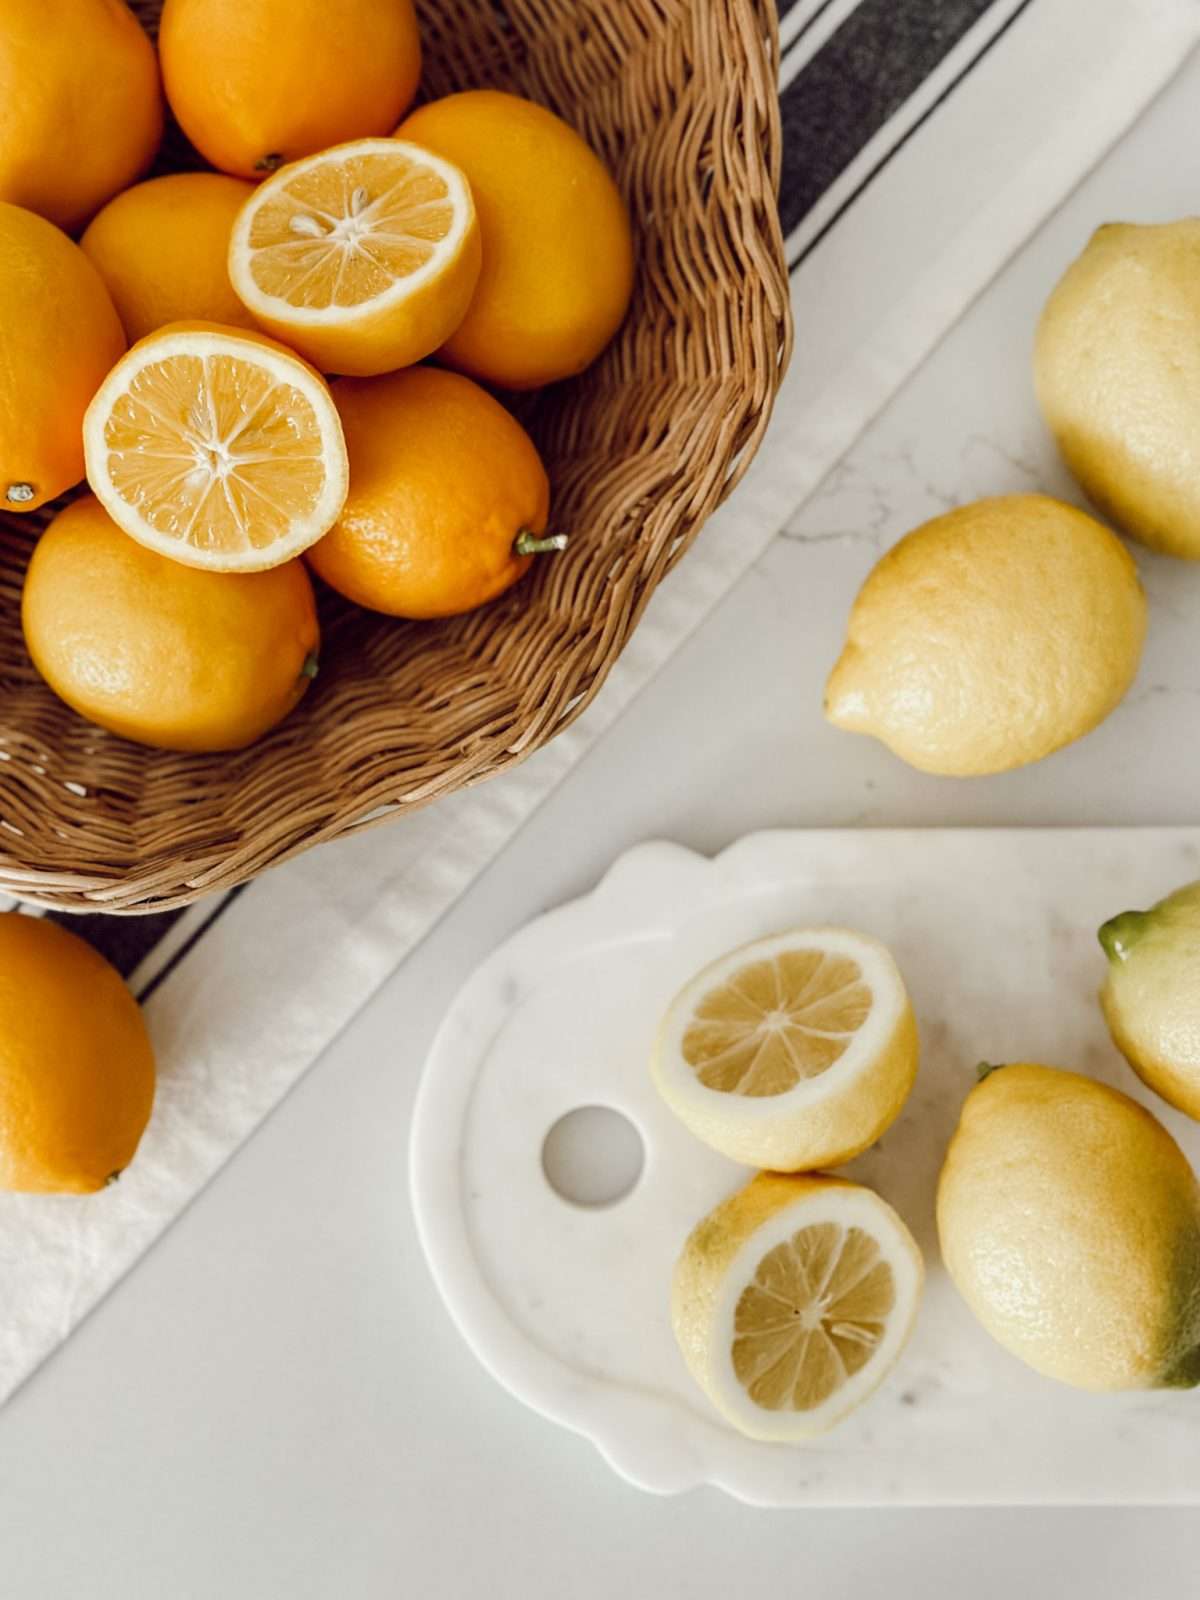 Two varieties of lemons include the Meyer lemon and the common lemon.